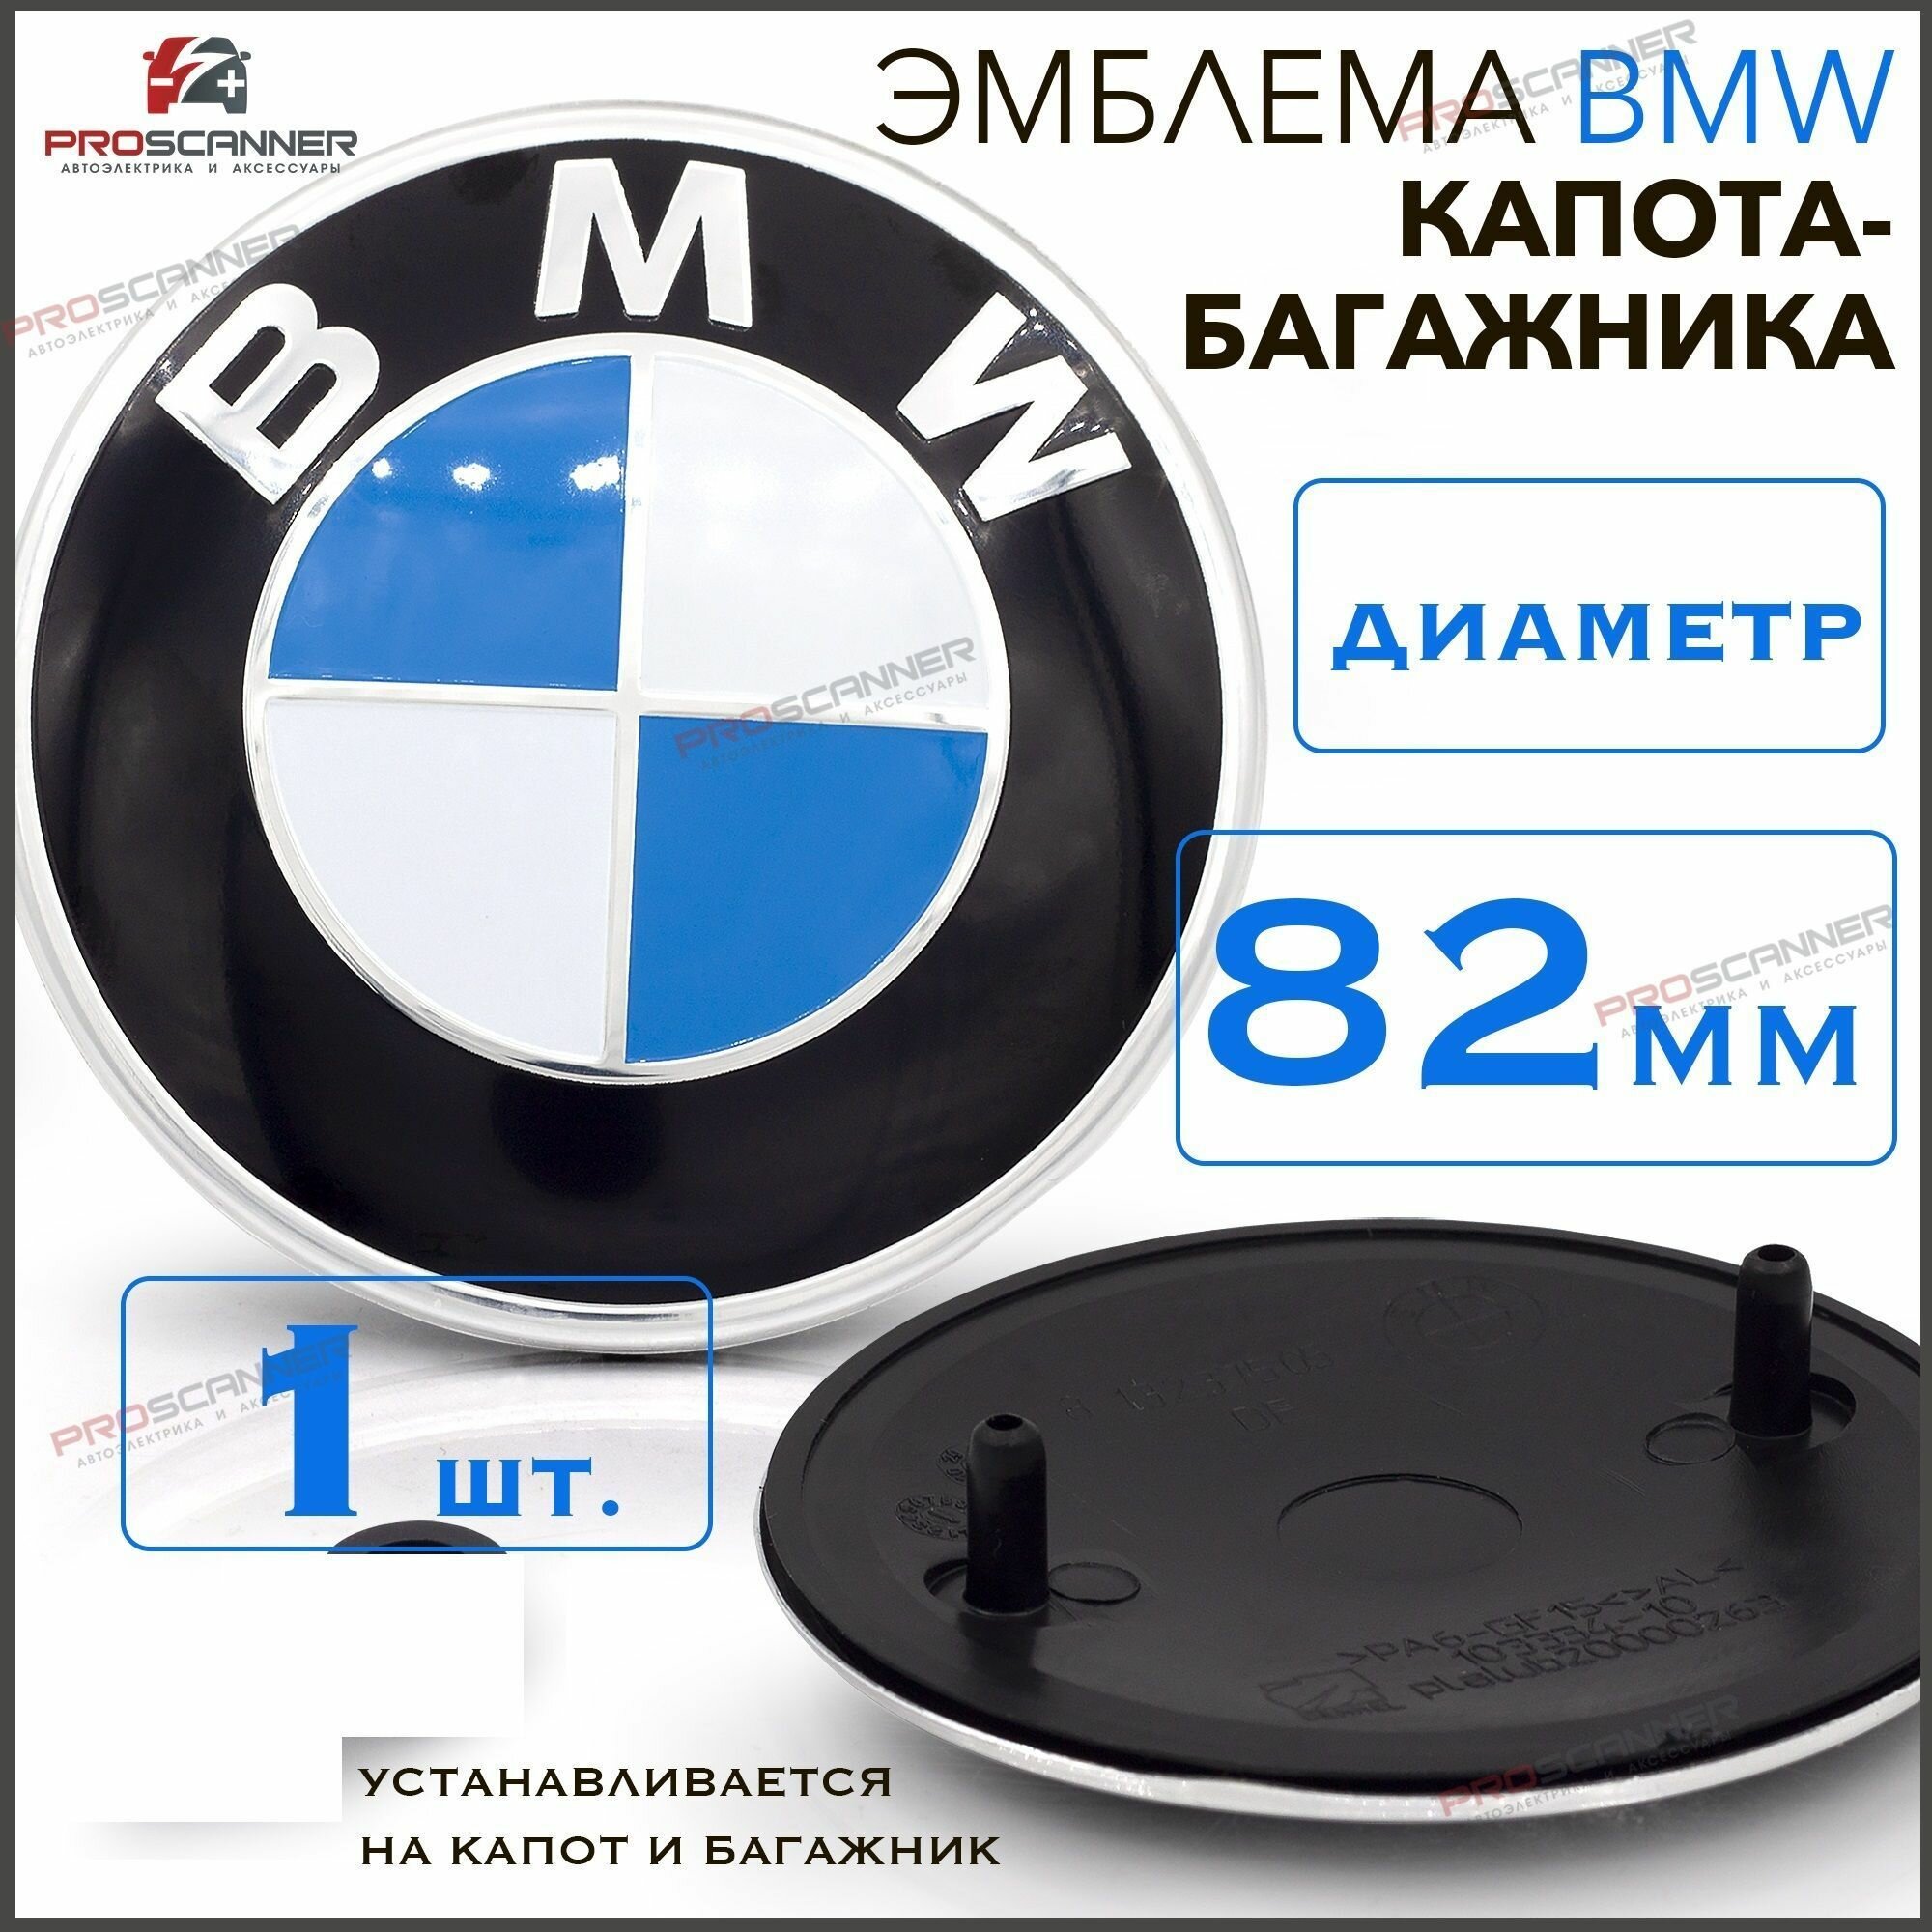 Эмблема BMW 82 мм на капот-багажник Blue White синяя / Значок на капот и багажник / Шильдик